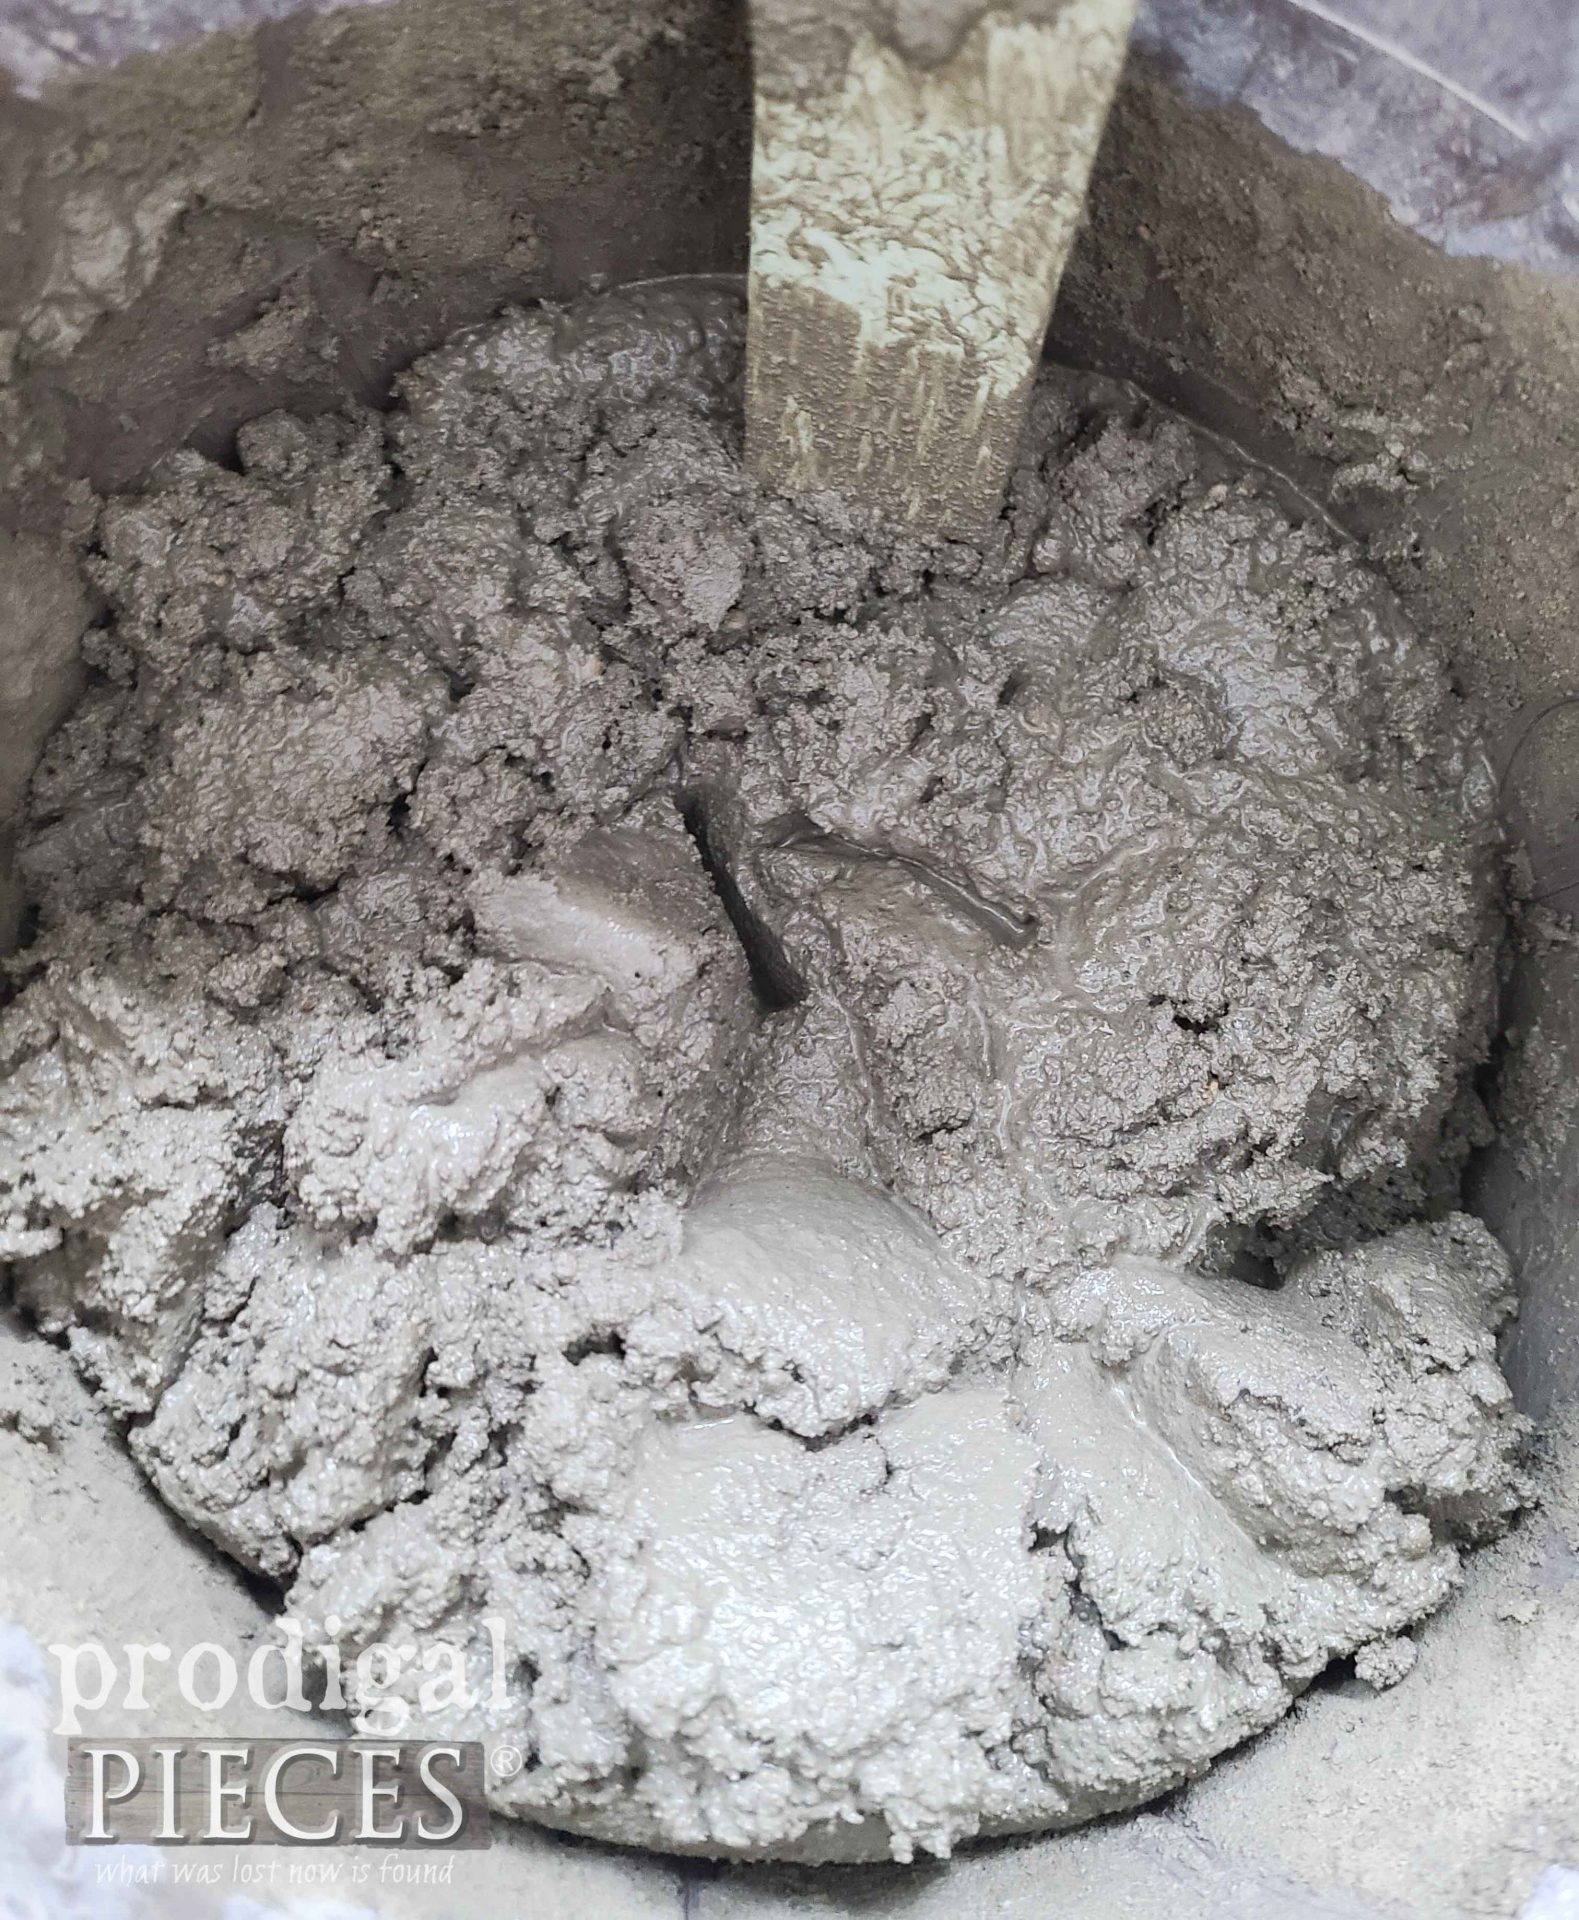 Mixing Concrete in Bucket | prodigalpieces.com